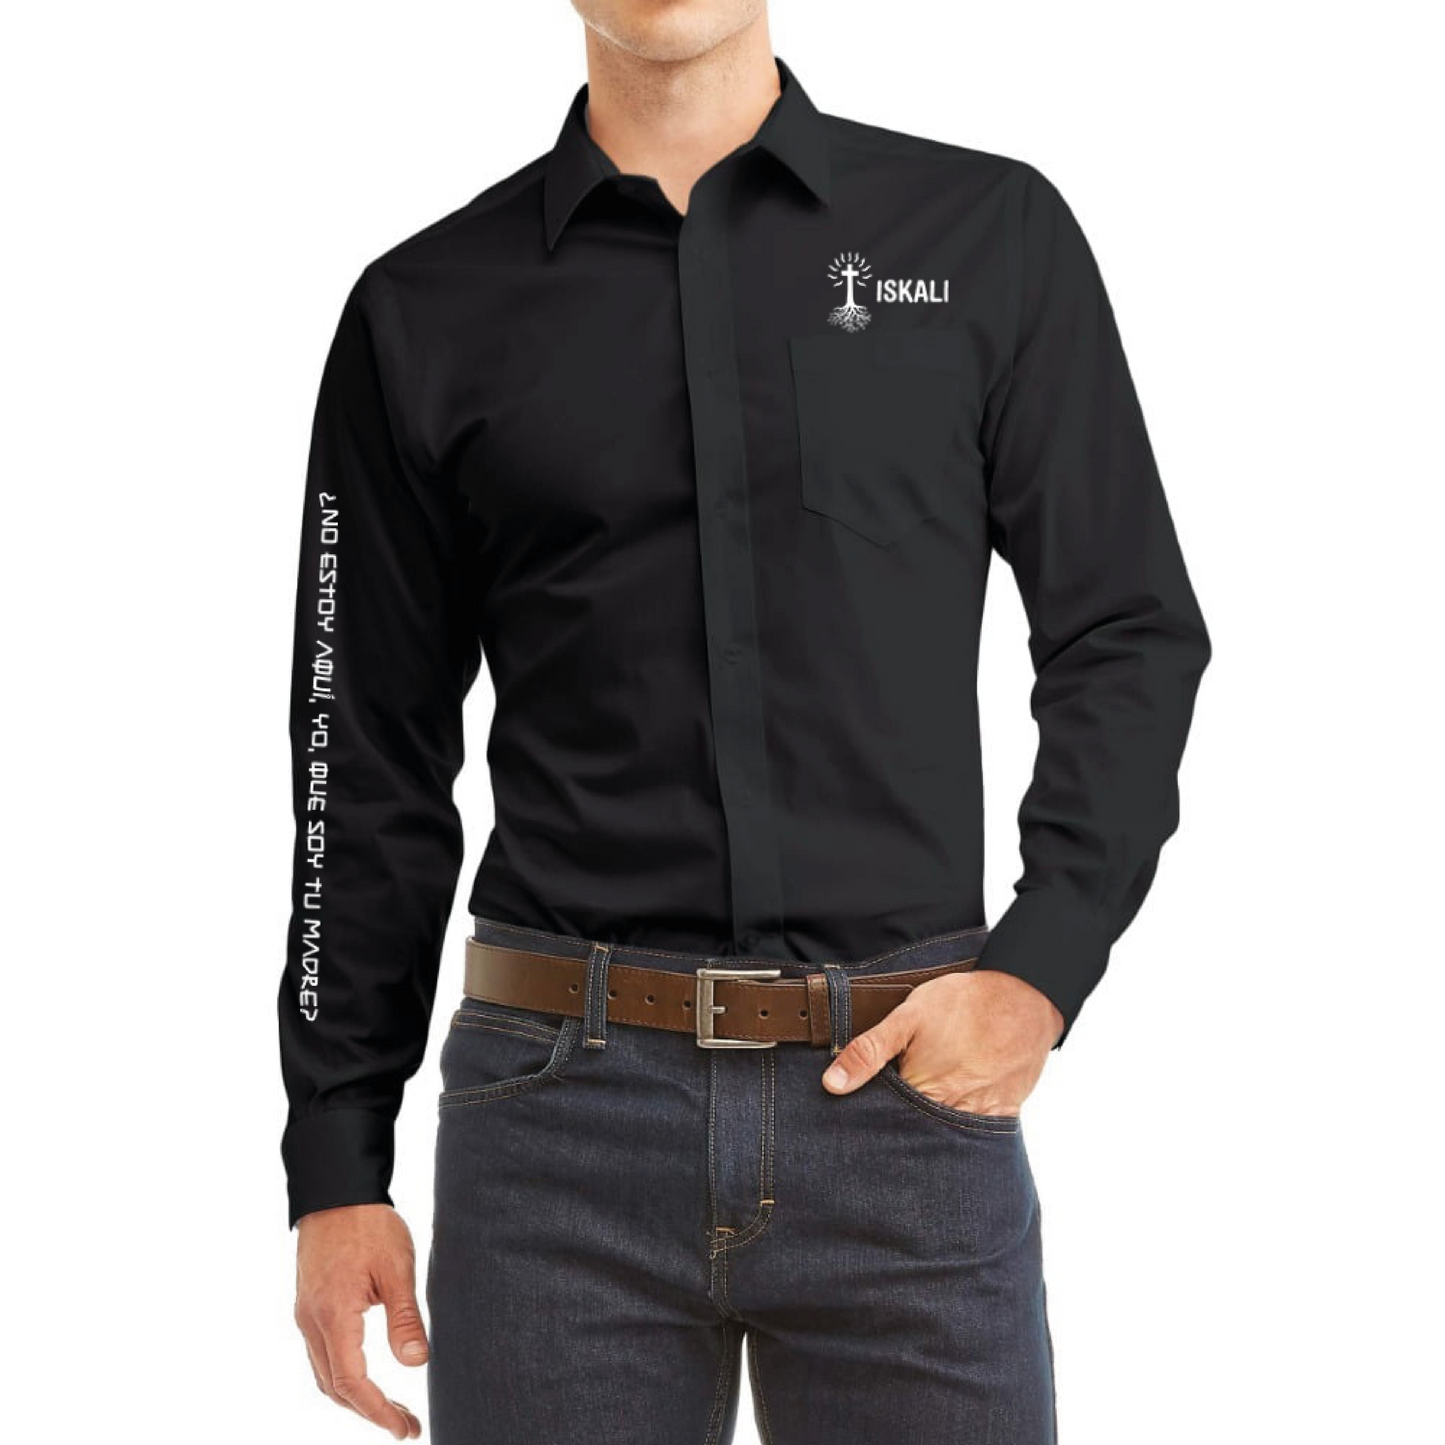 Iskali Special Edition: La camisa negra (hombre)